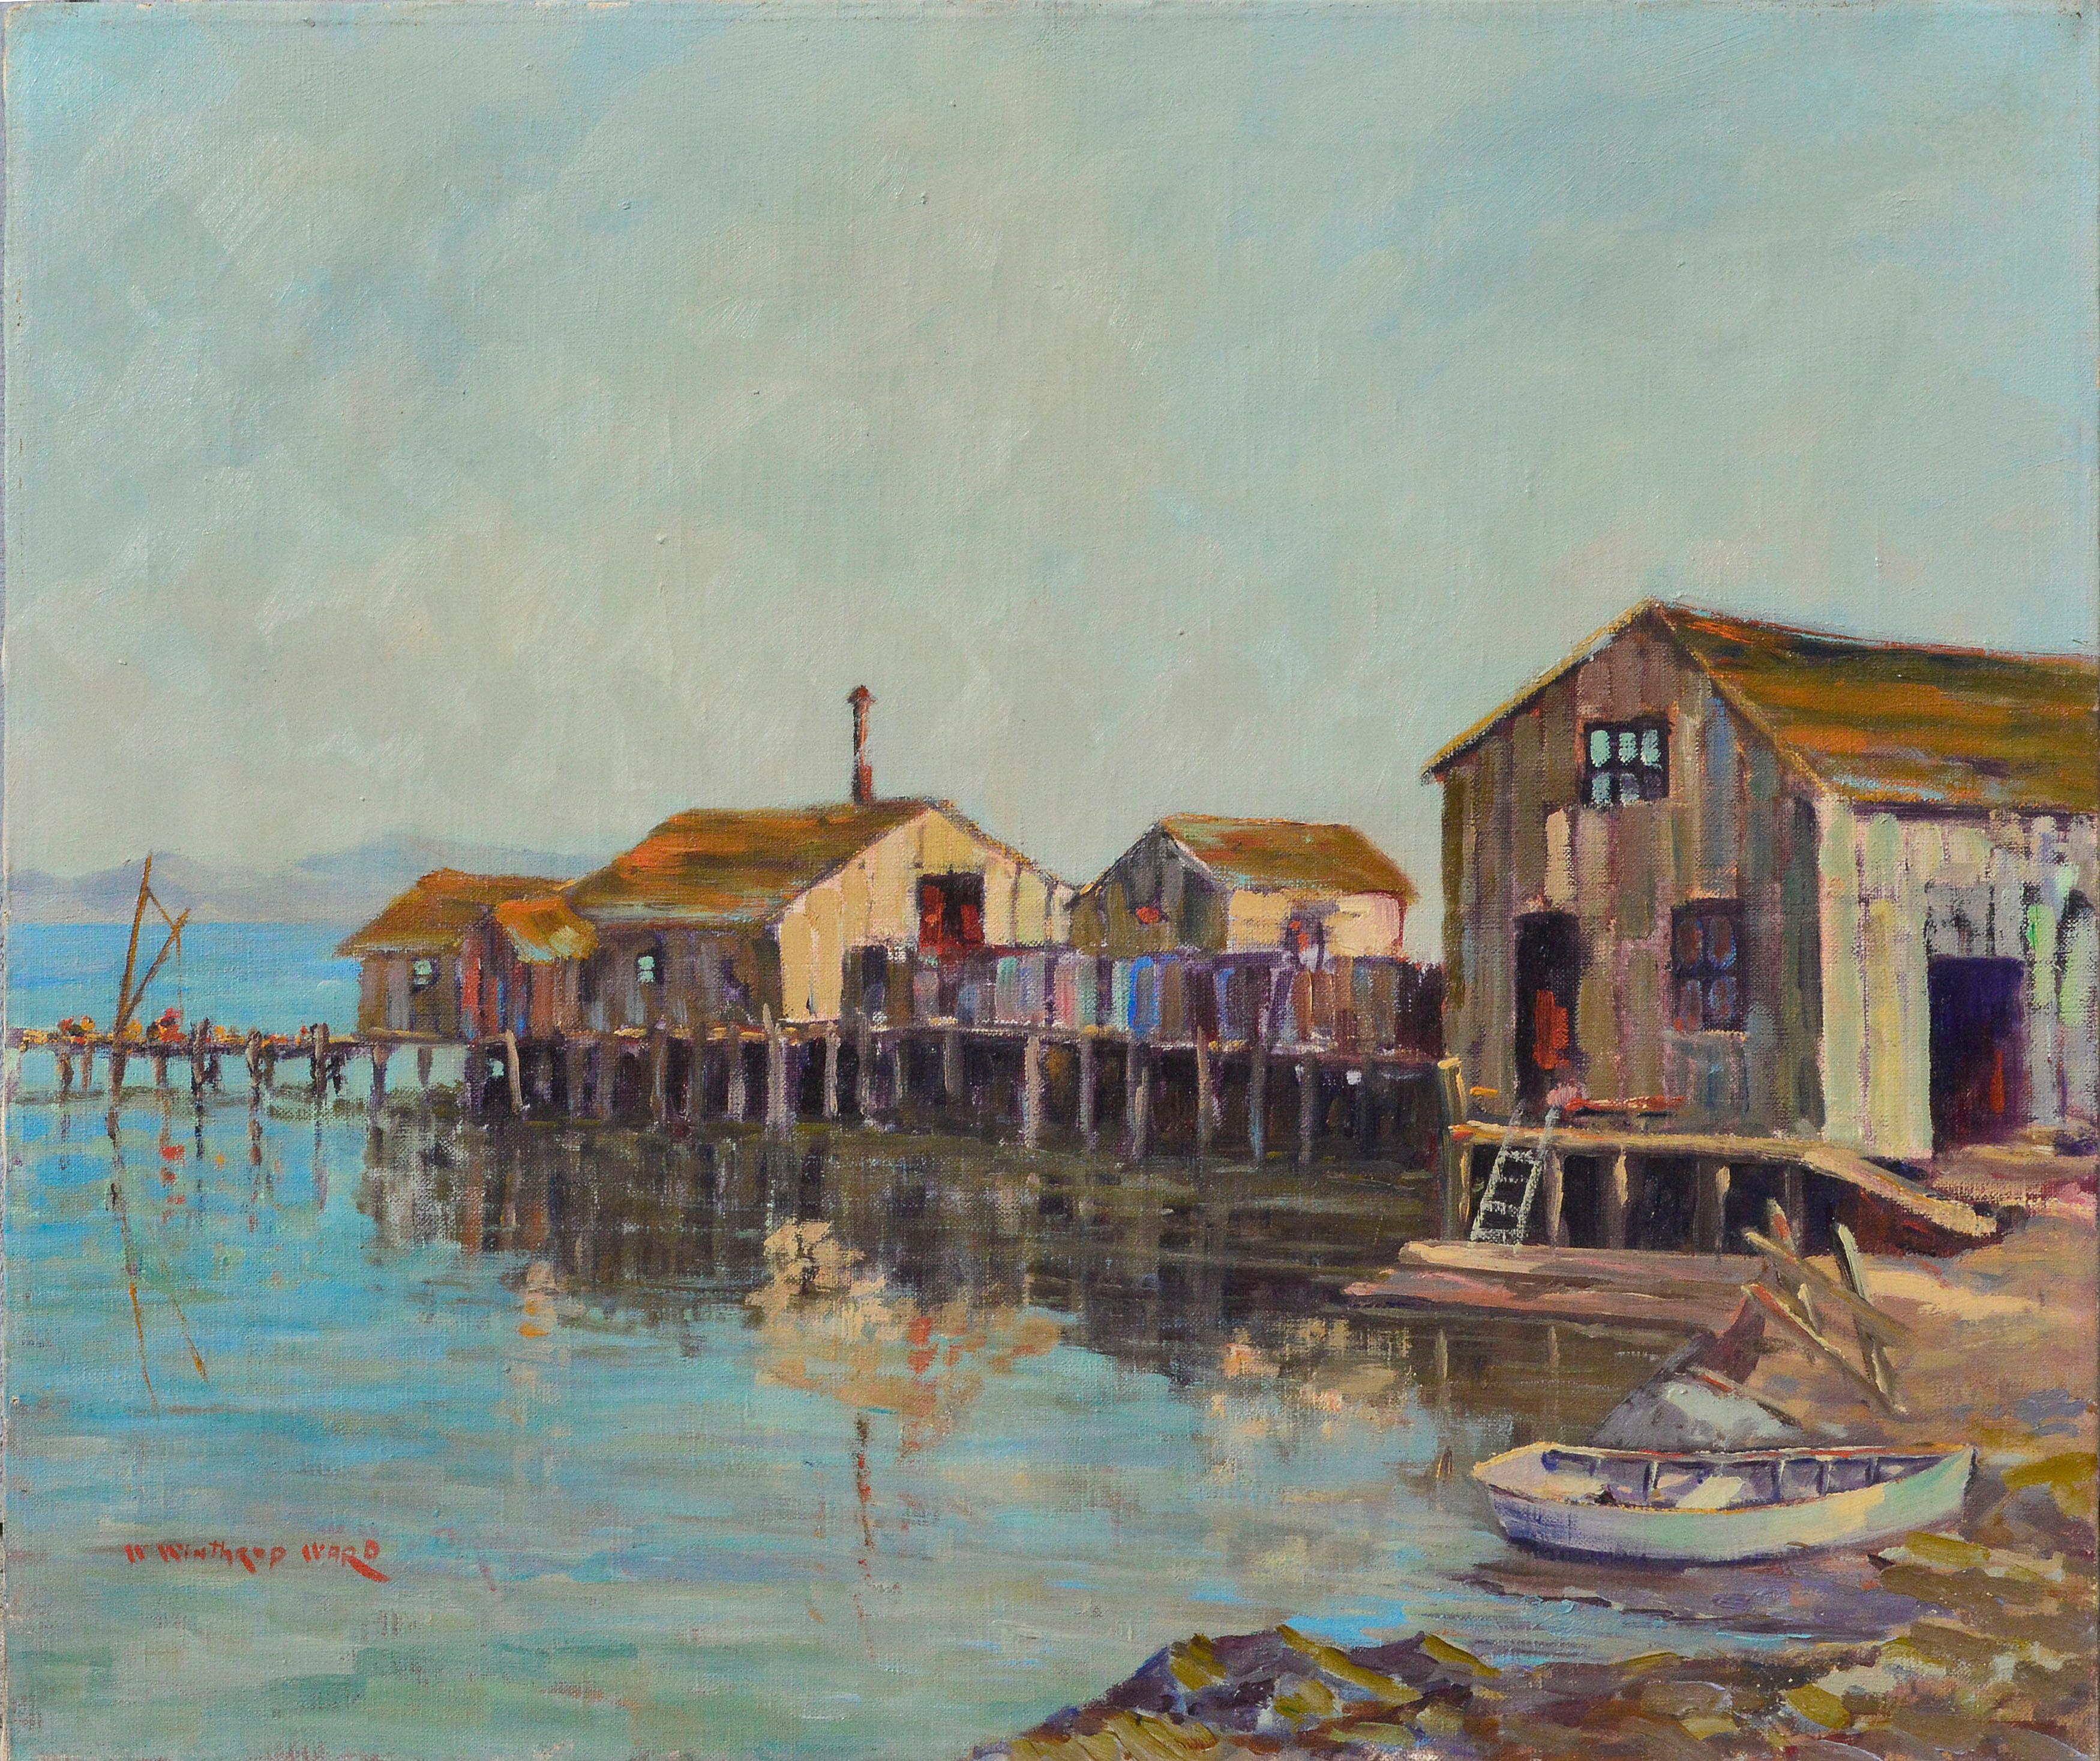 Pillar Point Fishing Dock, Half Moon Bay - Mid Century Landscape - Painting by William Winthrop Ward